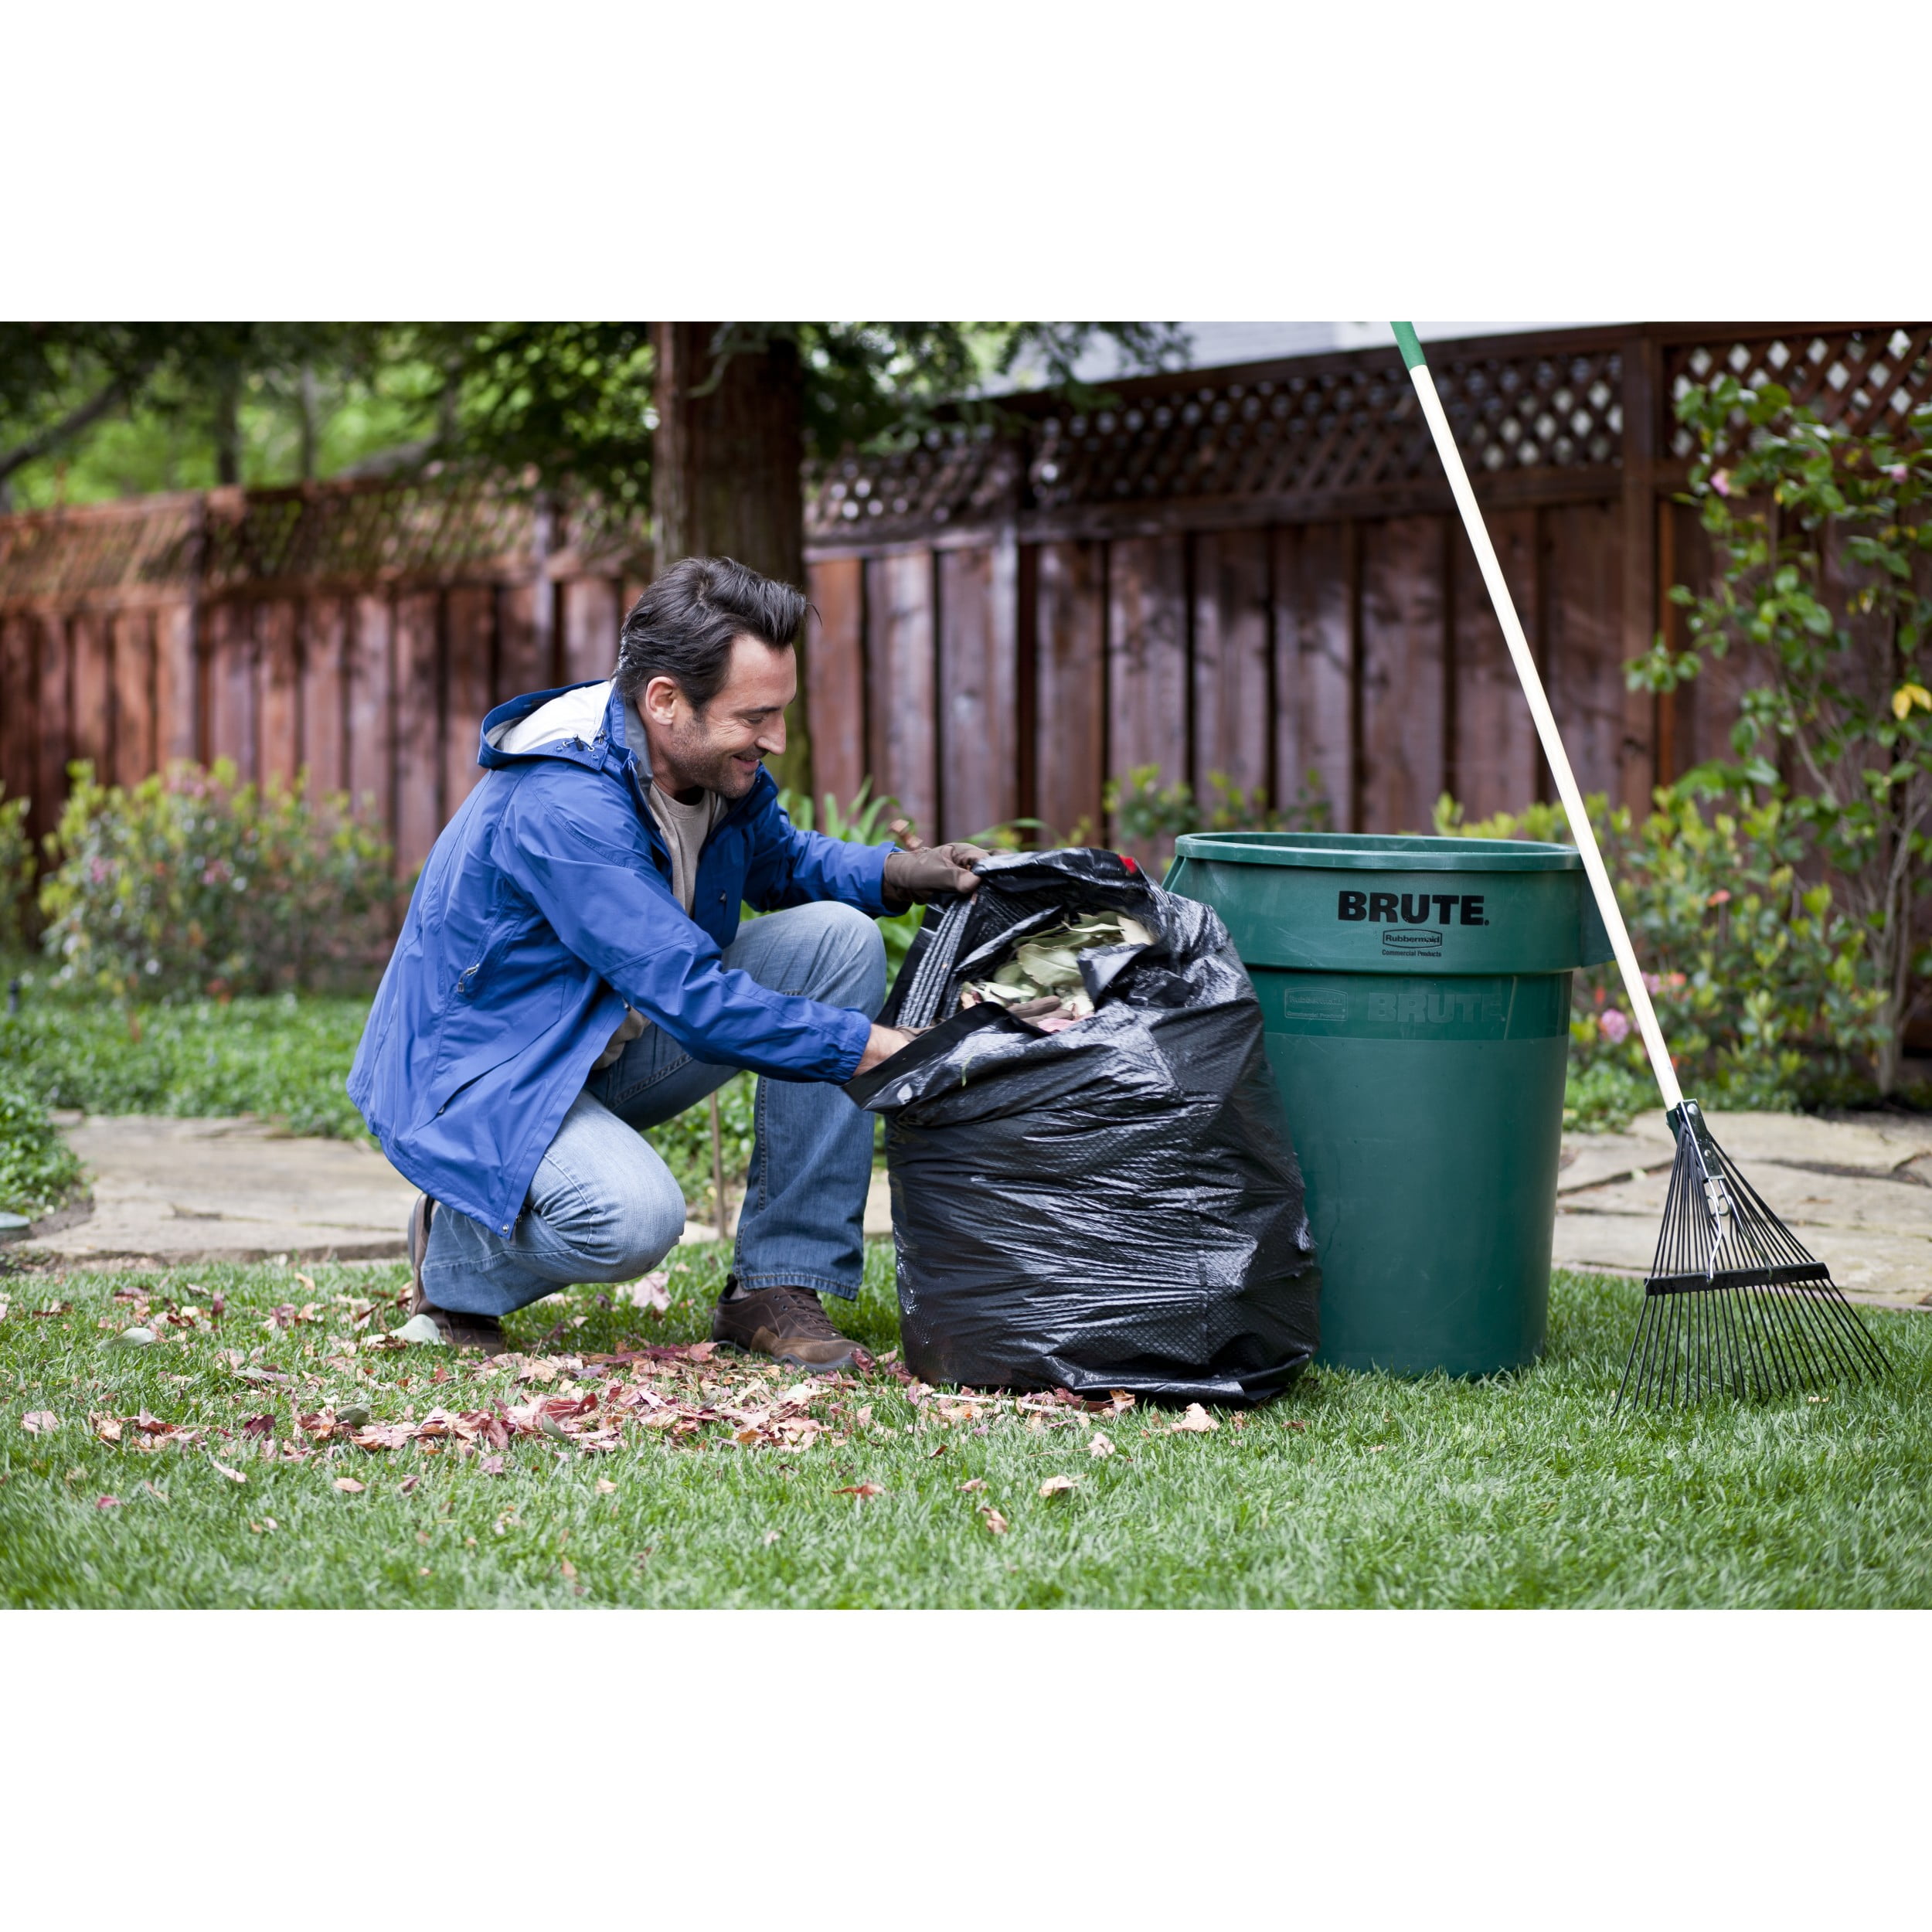 Glad Lawn & Leaf Trash Bags, 39 Gallon, Quick-Tie, 12 Ct, 1